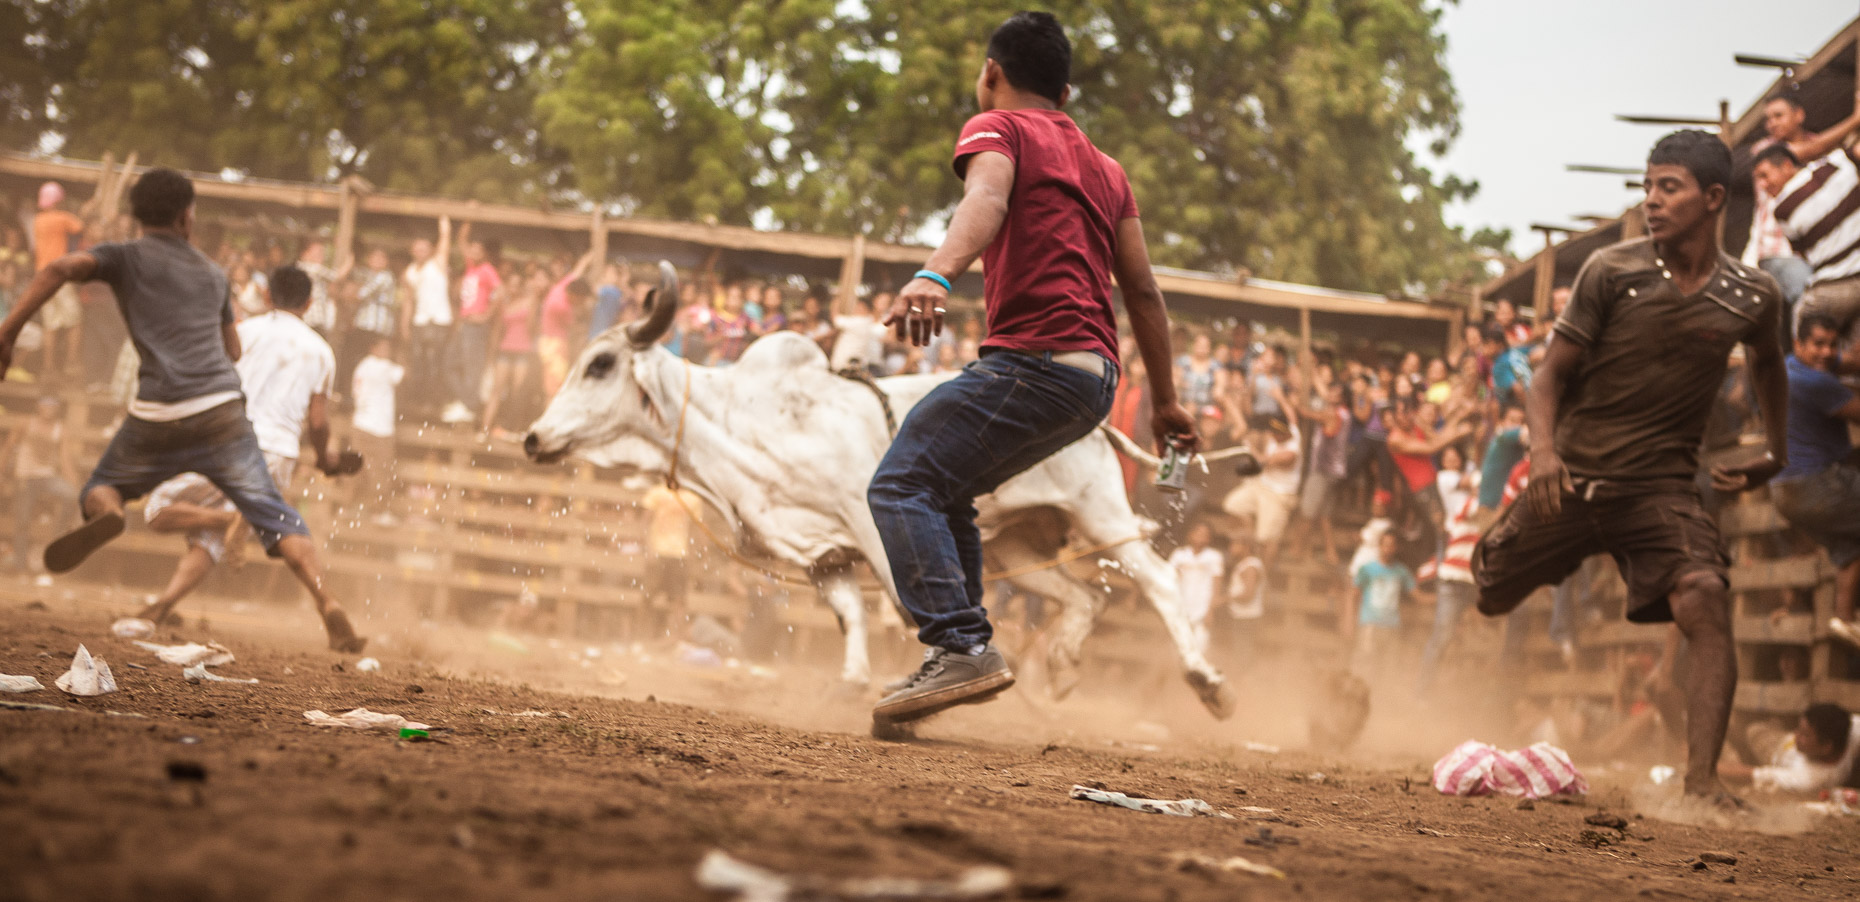 Bull Fight in Nicaragua